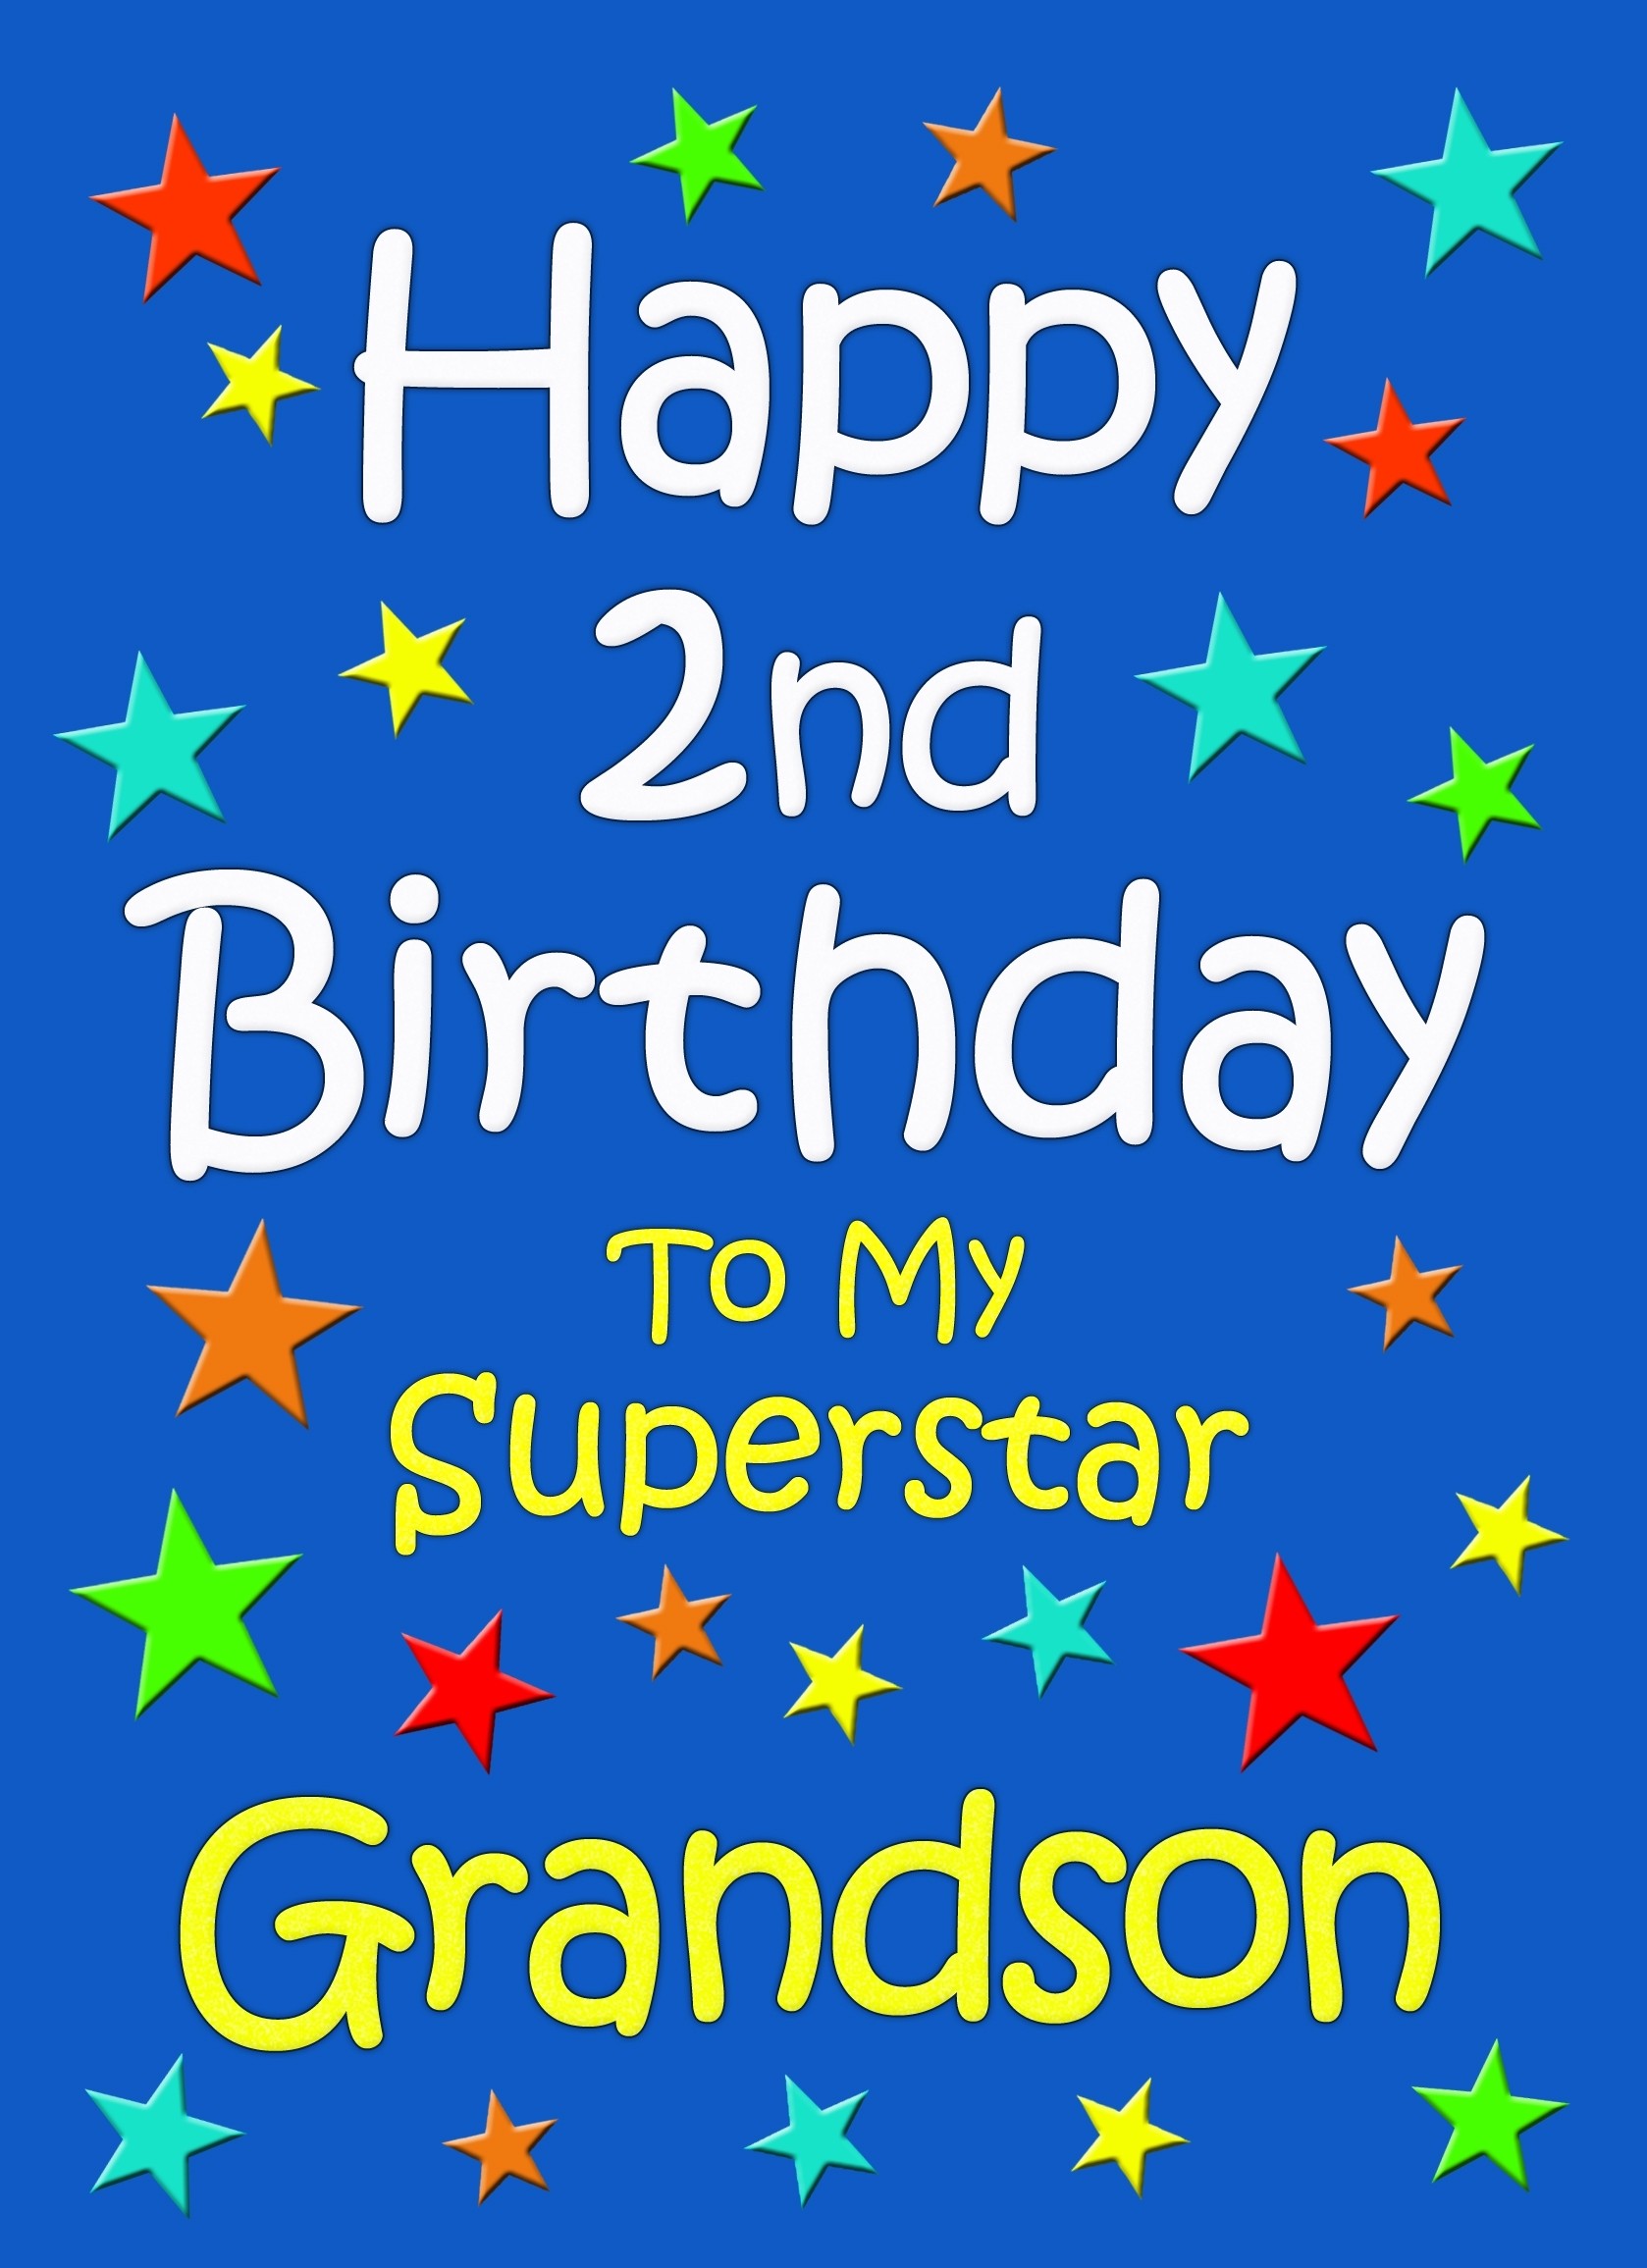 Grandson 2nd Birthday Card (Blue)